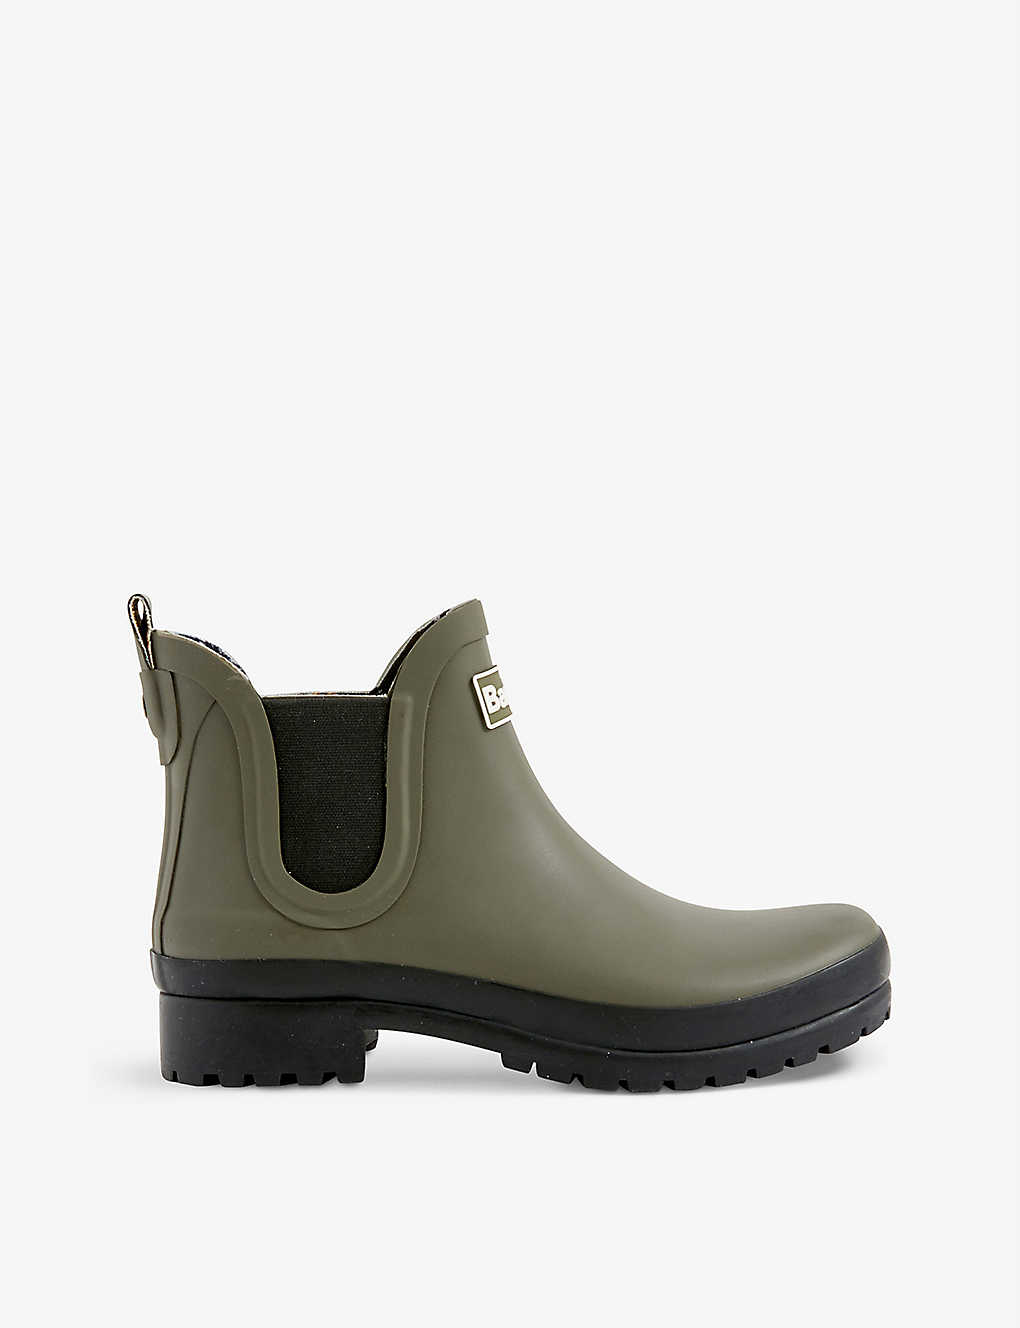 selfridges.com | Mallow branded rubber wellington boots